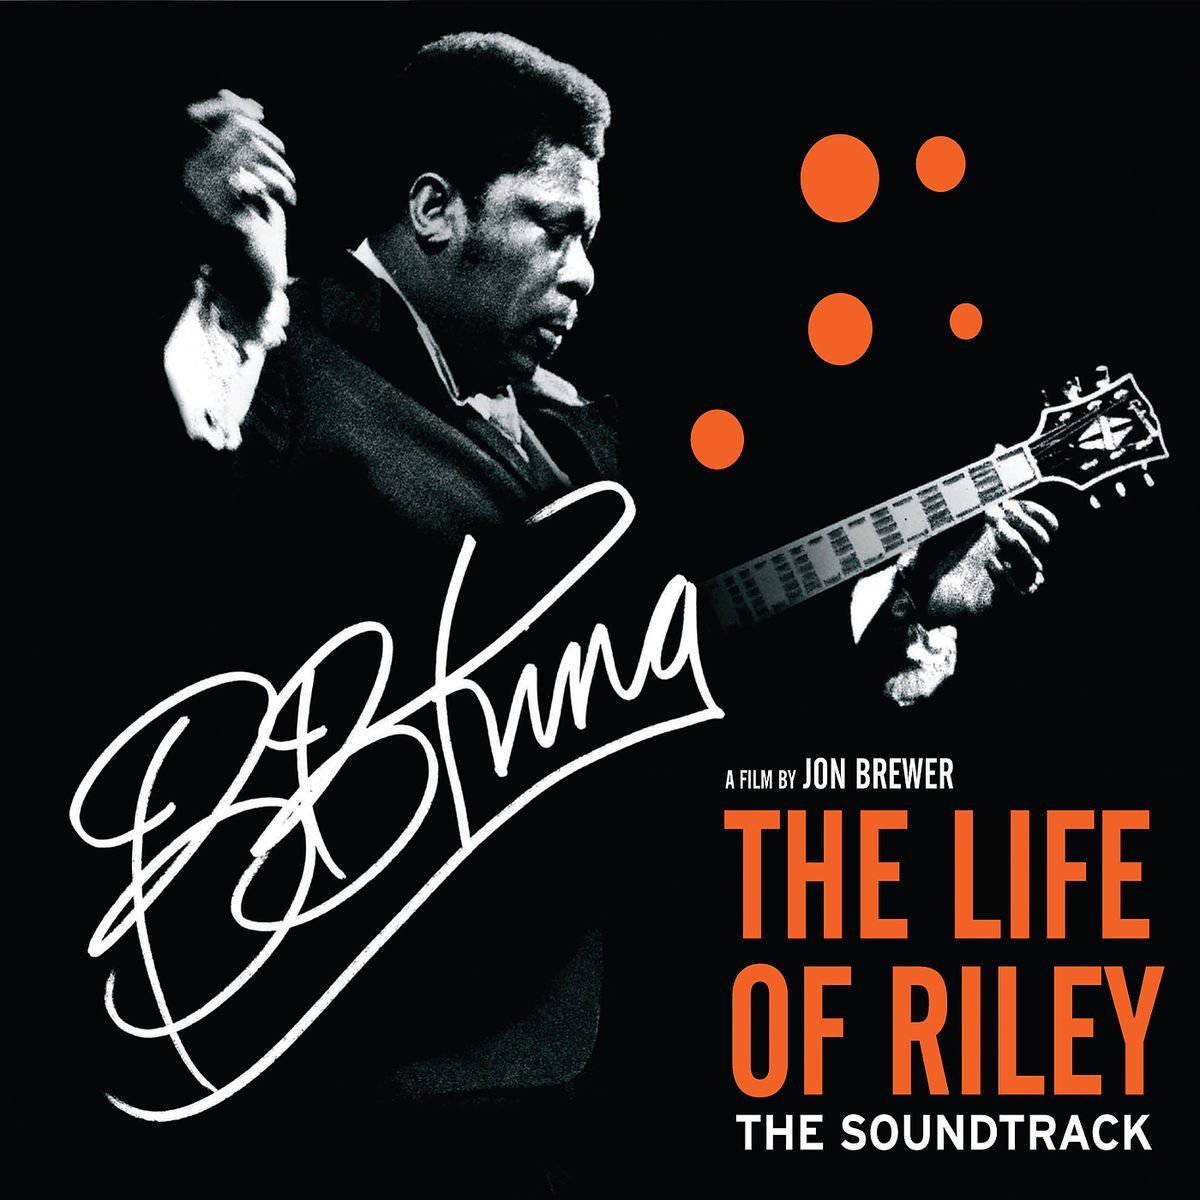 B.B. King Documentary: The Life of Riley